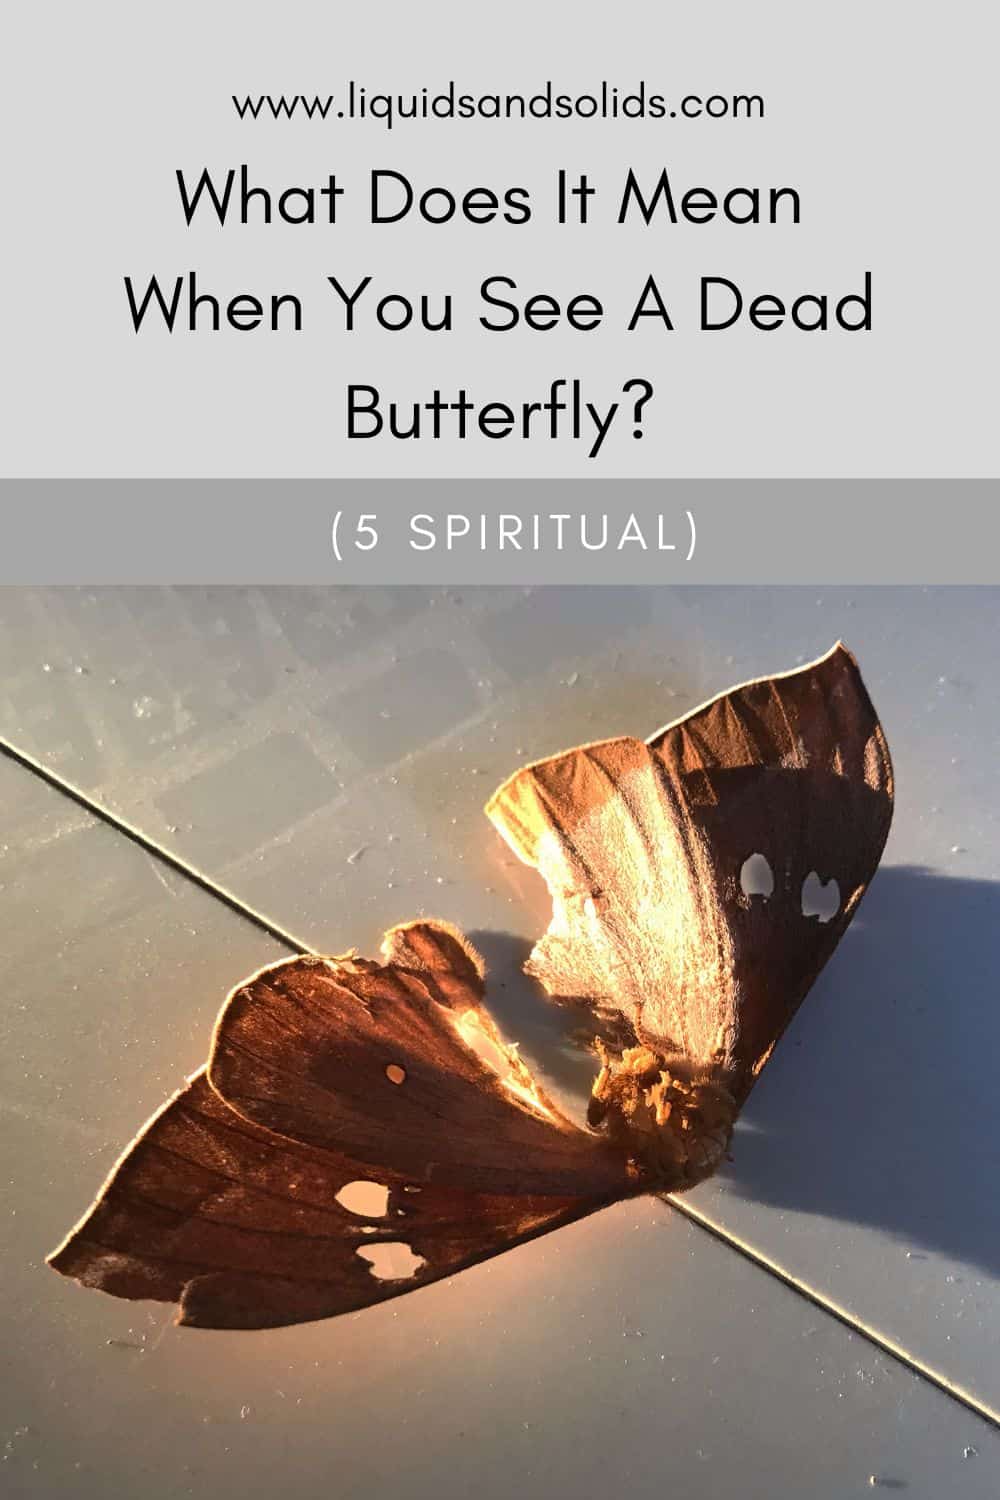  Hvad betyder det, når du ser en død sommerfugl? (5 åndelige betydninger)